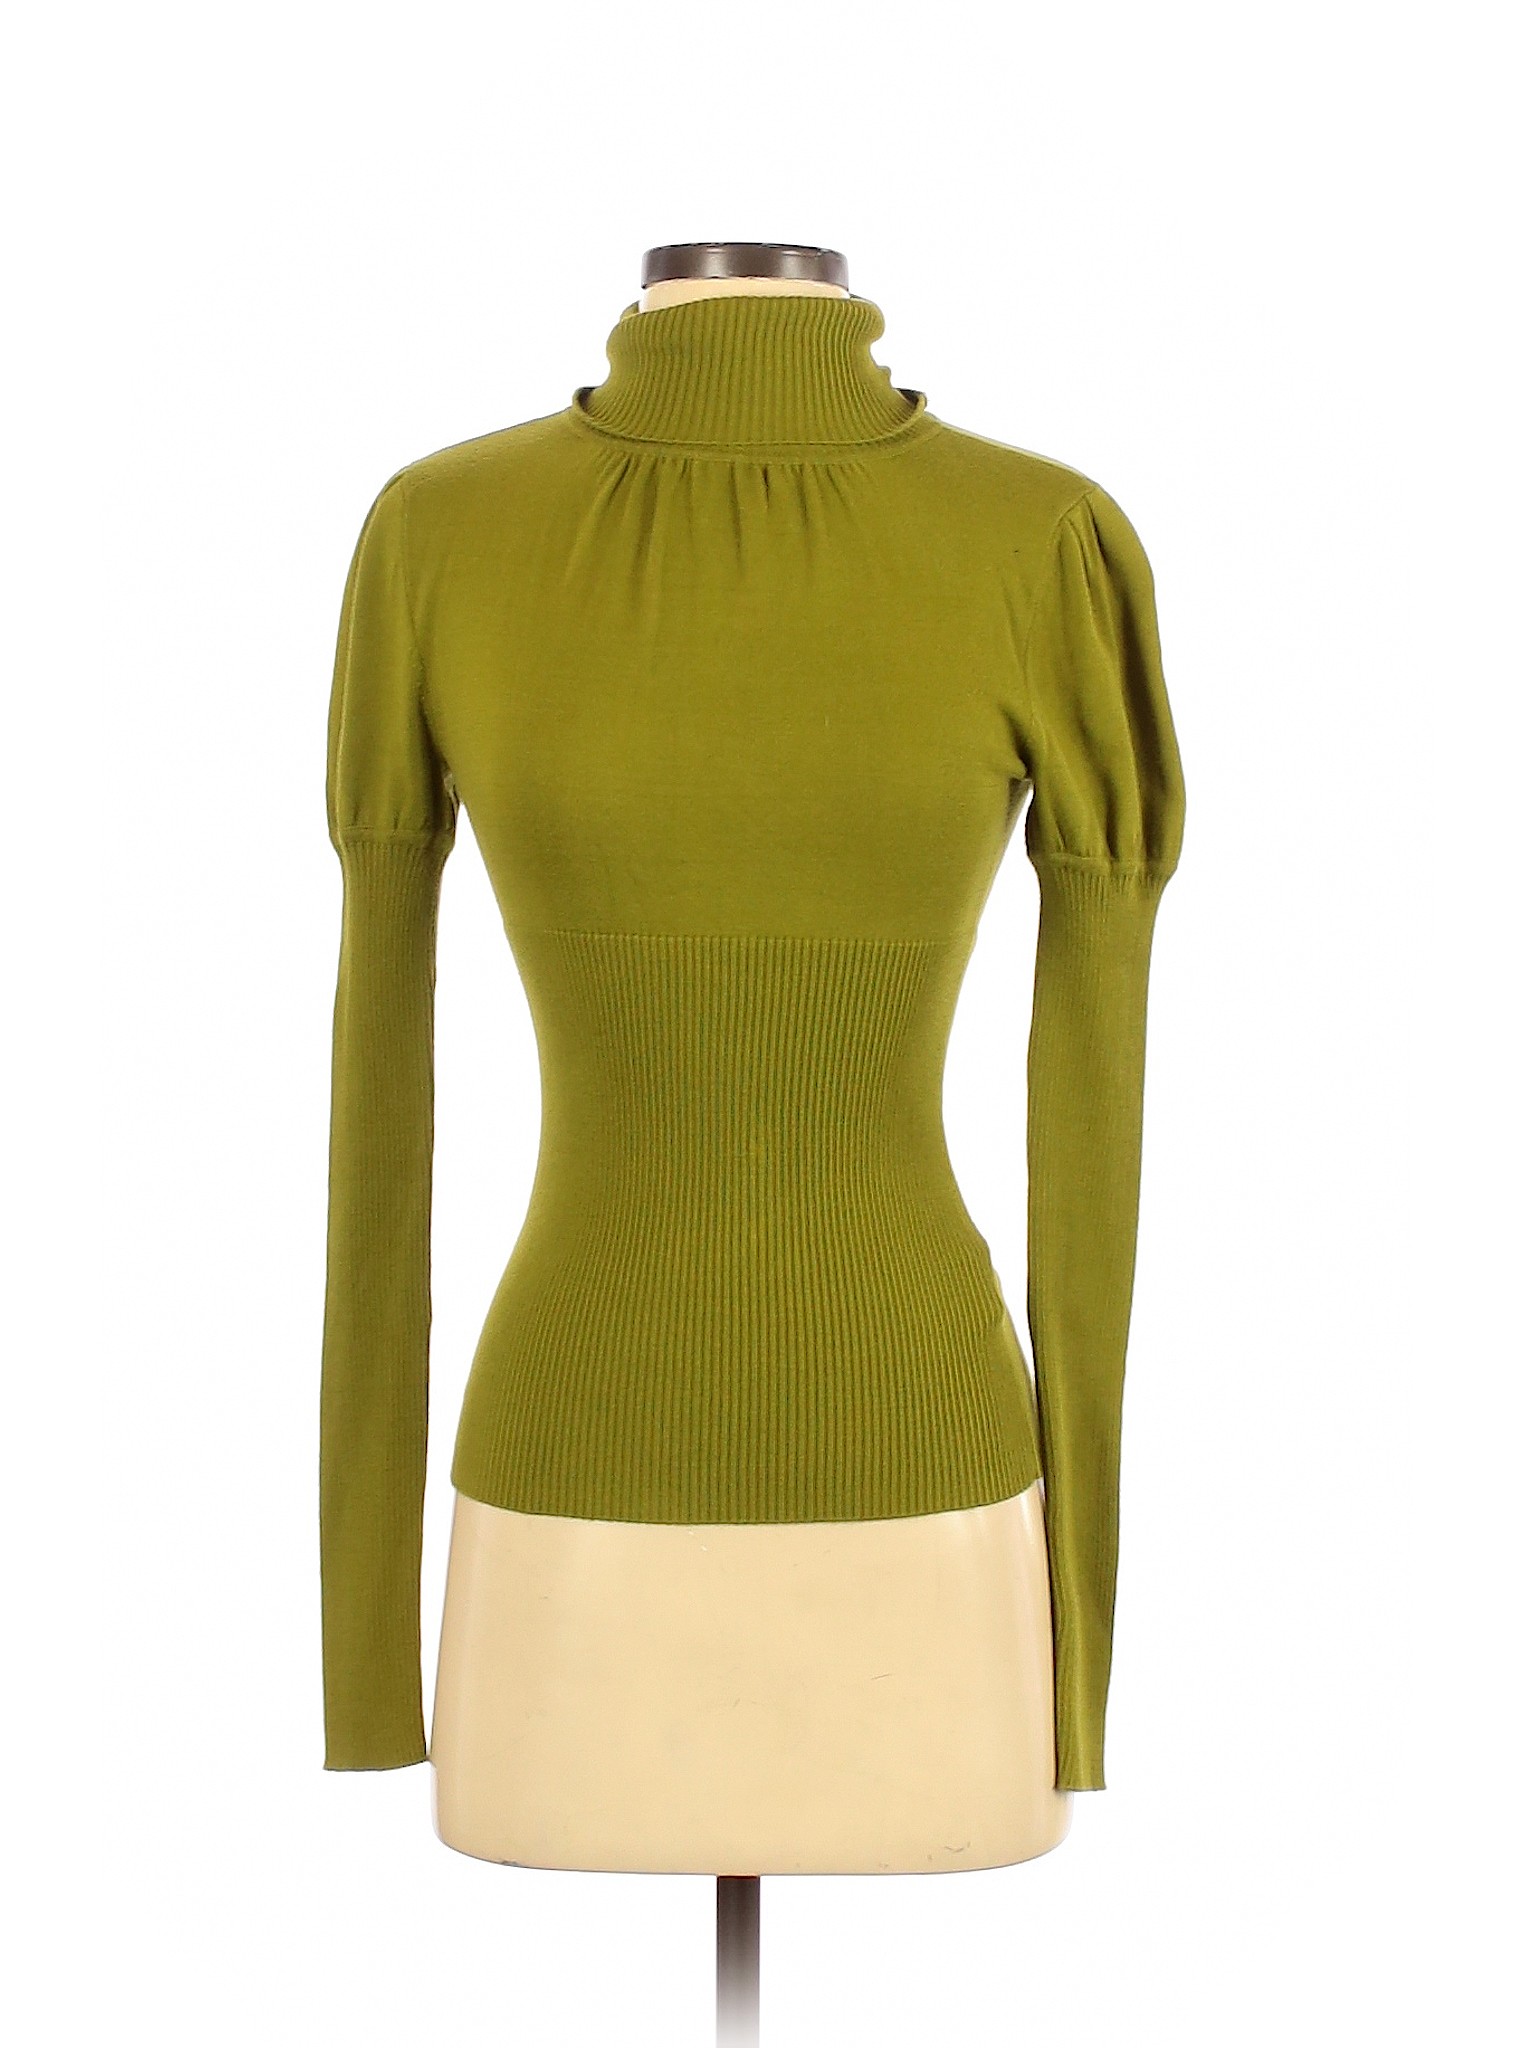 Gianni Women Green Turtleneck Sweater XS | eBay